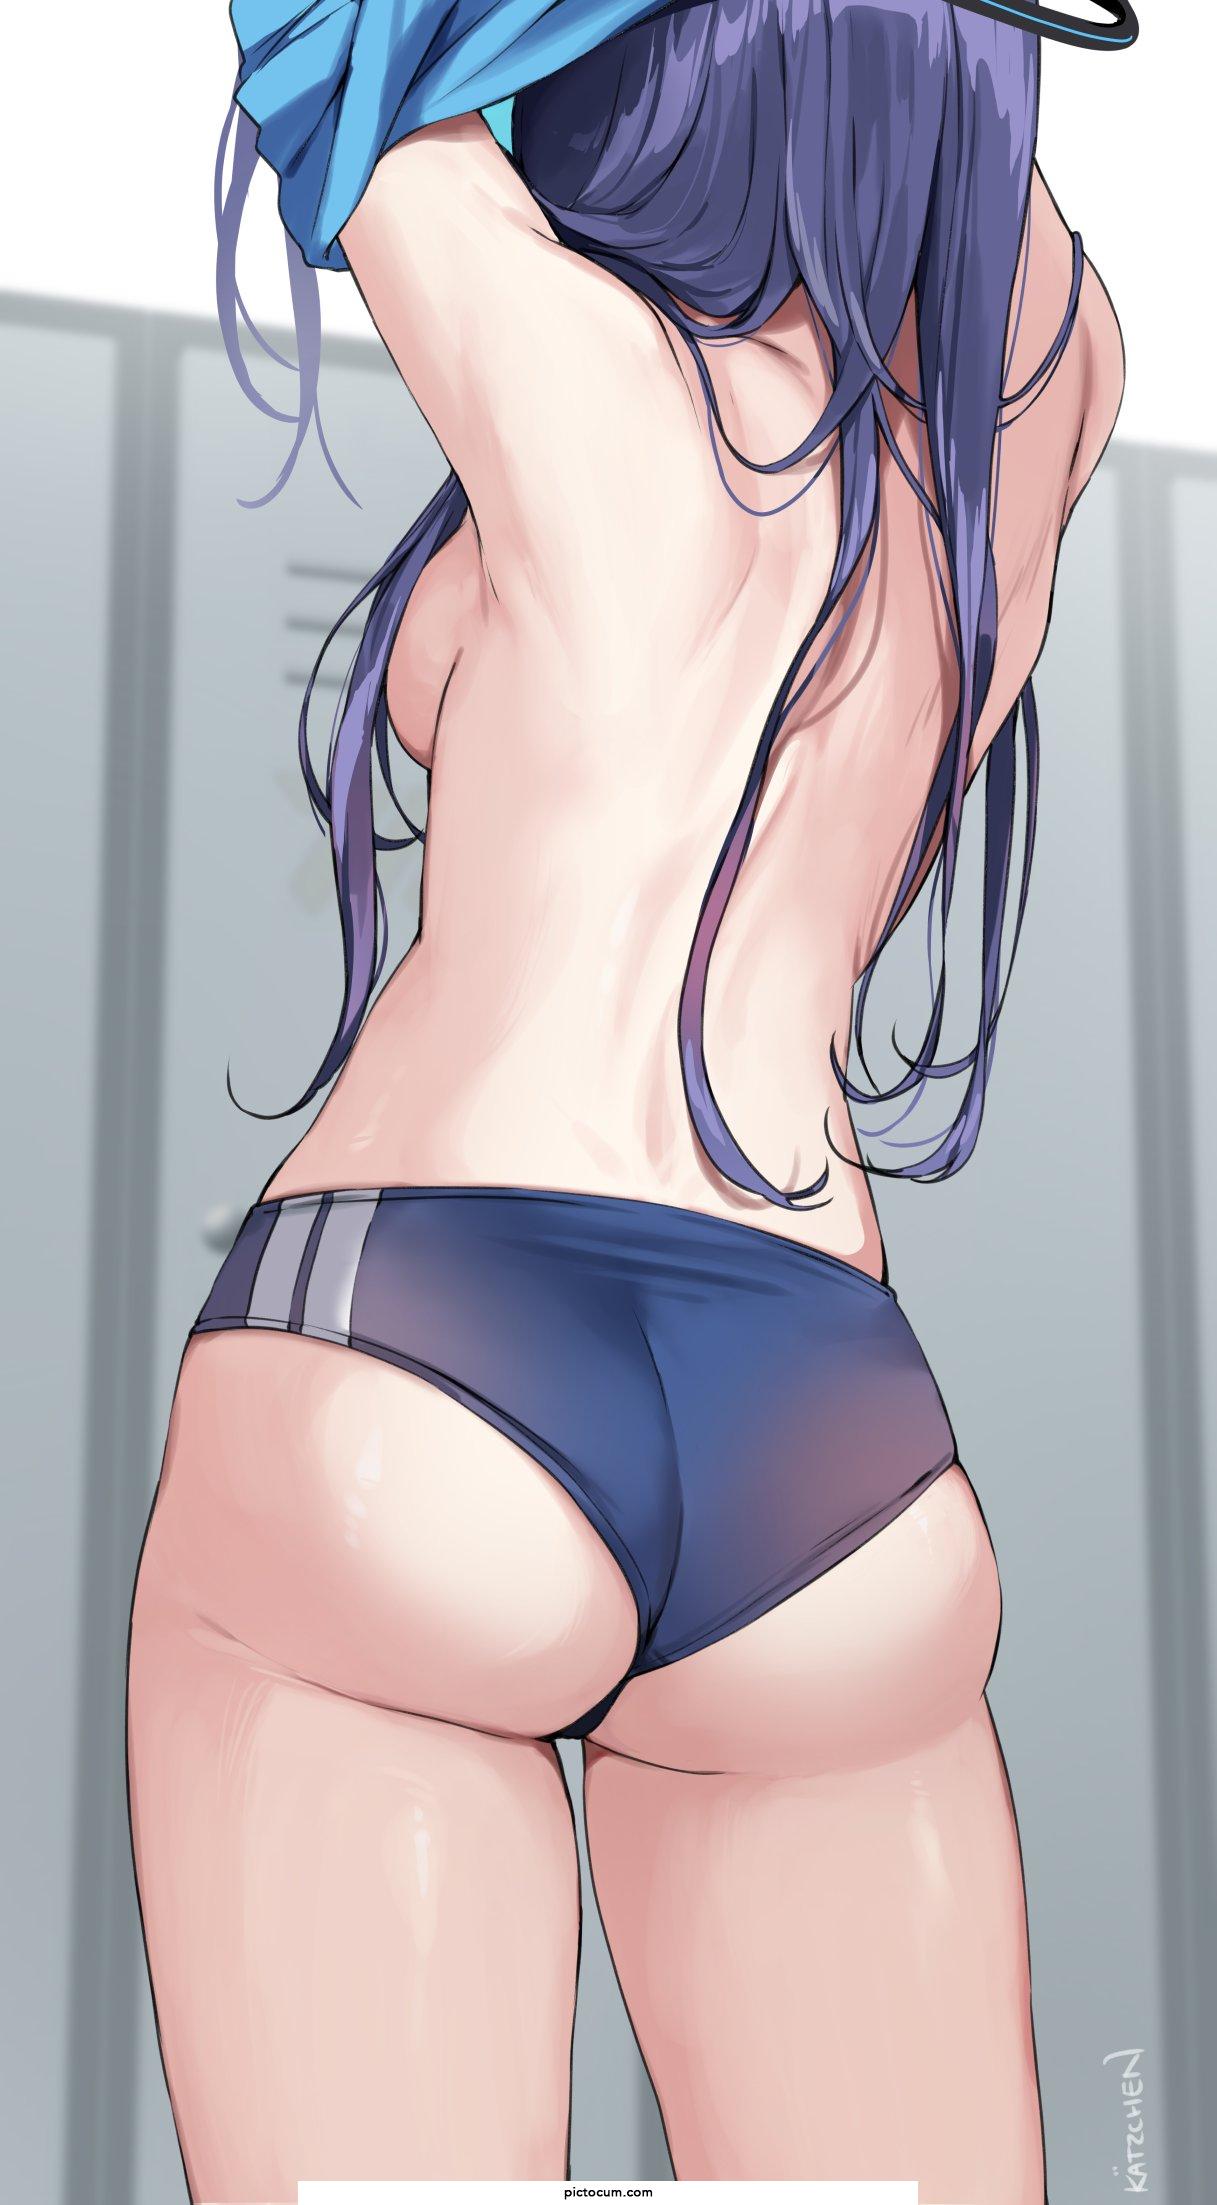 Yuuka undressing